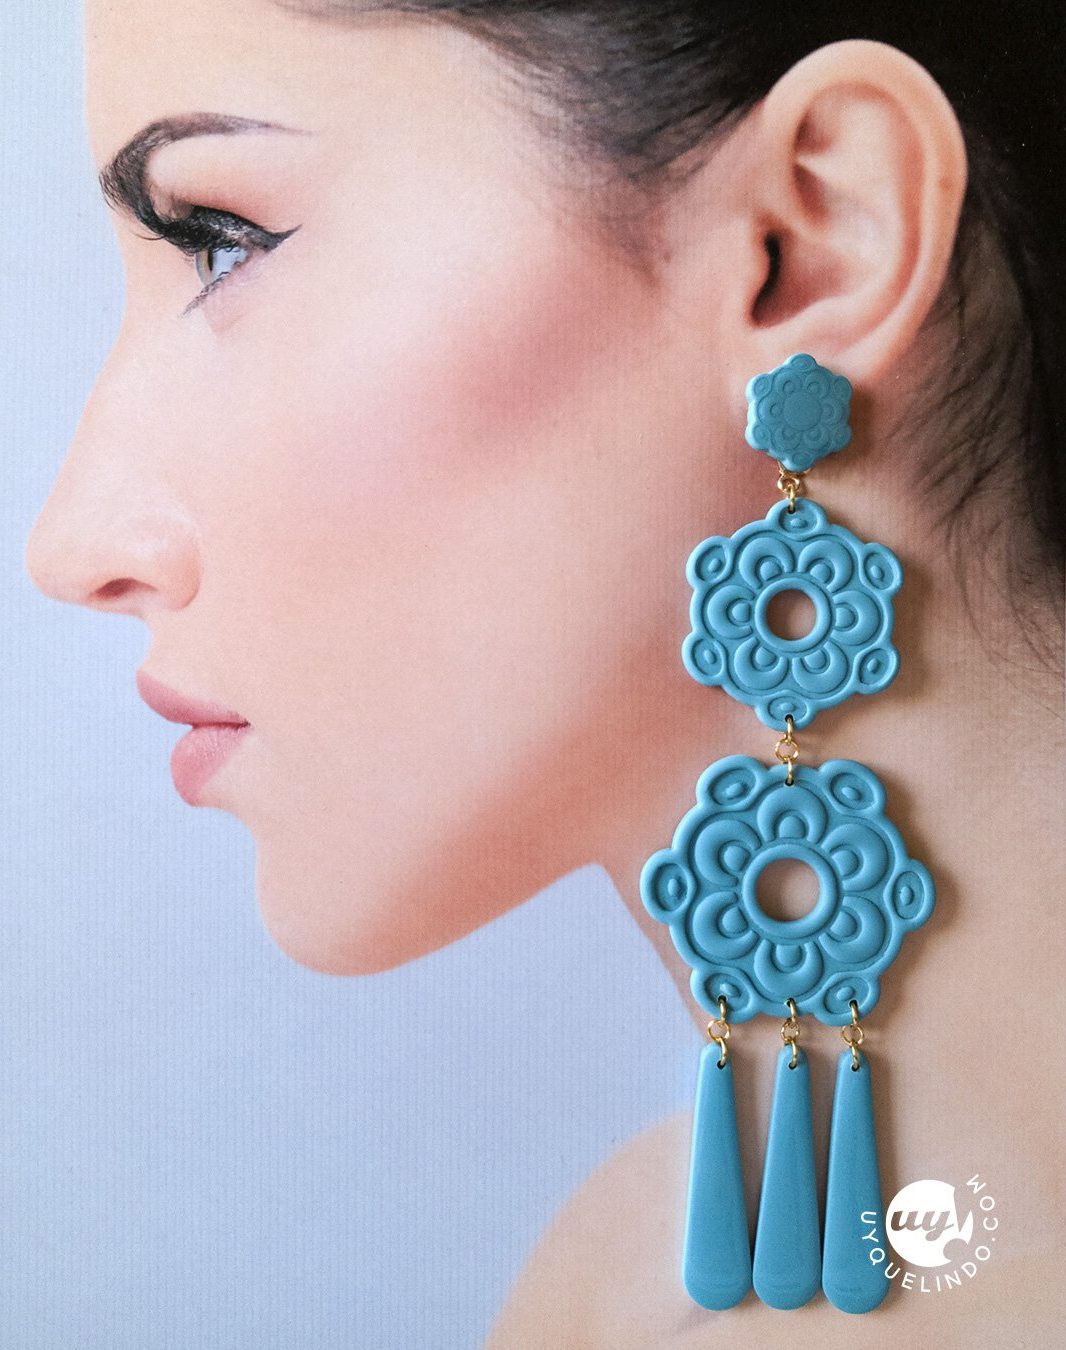 Exclusive "La Lola" long dangle earrings